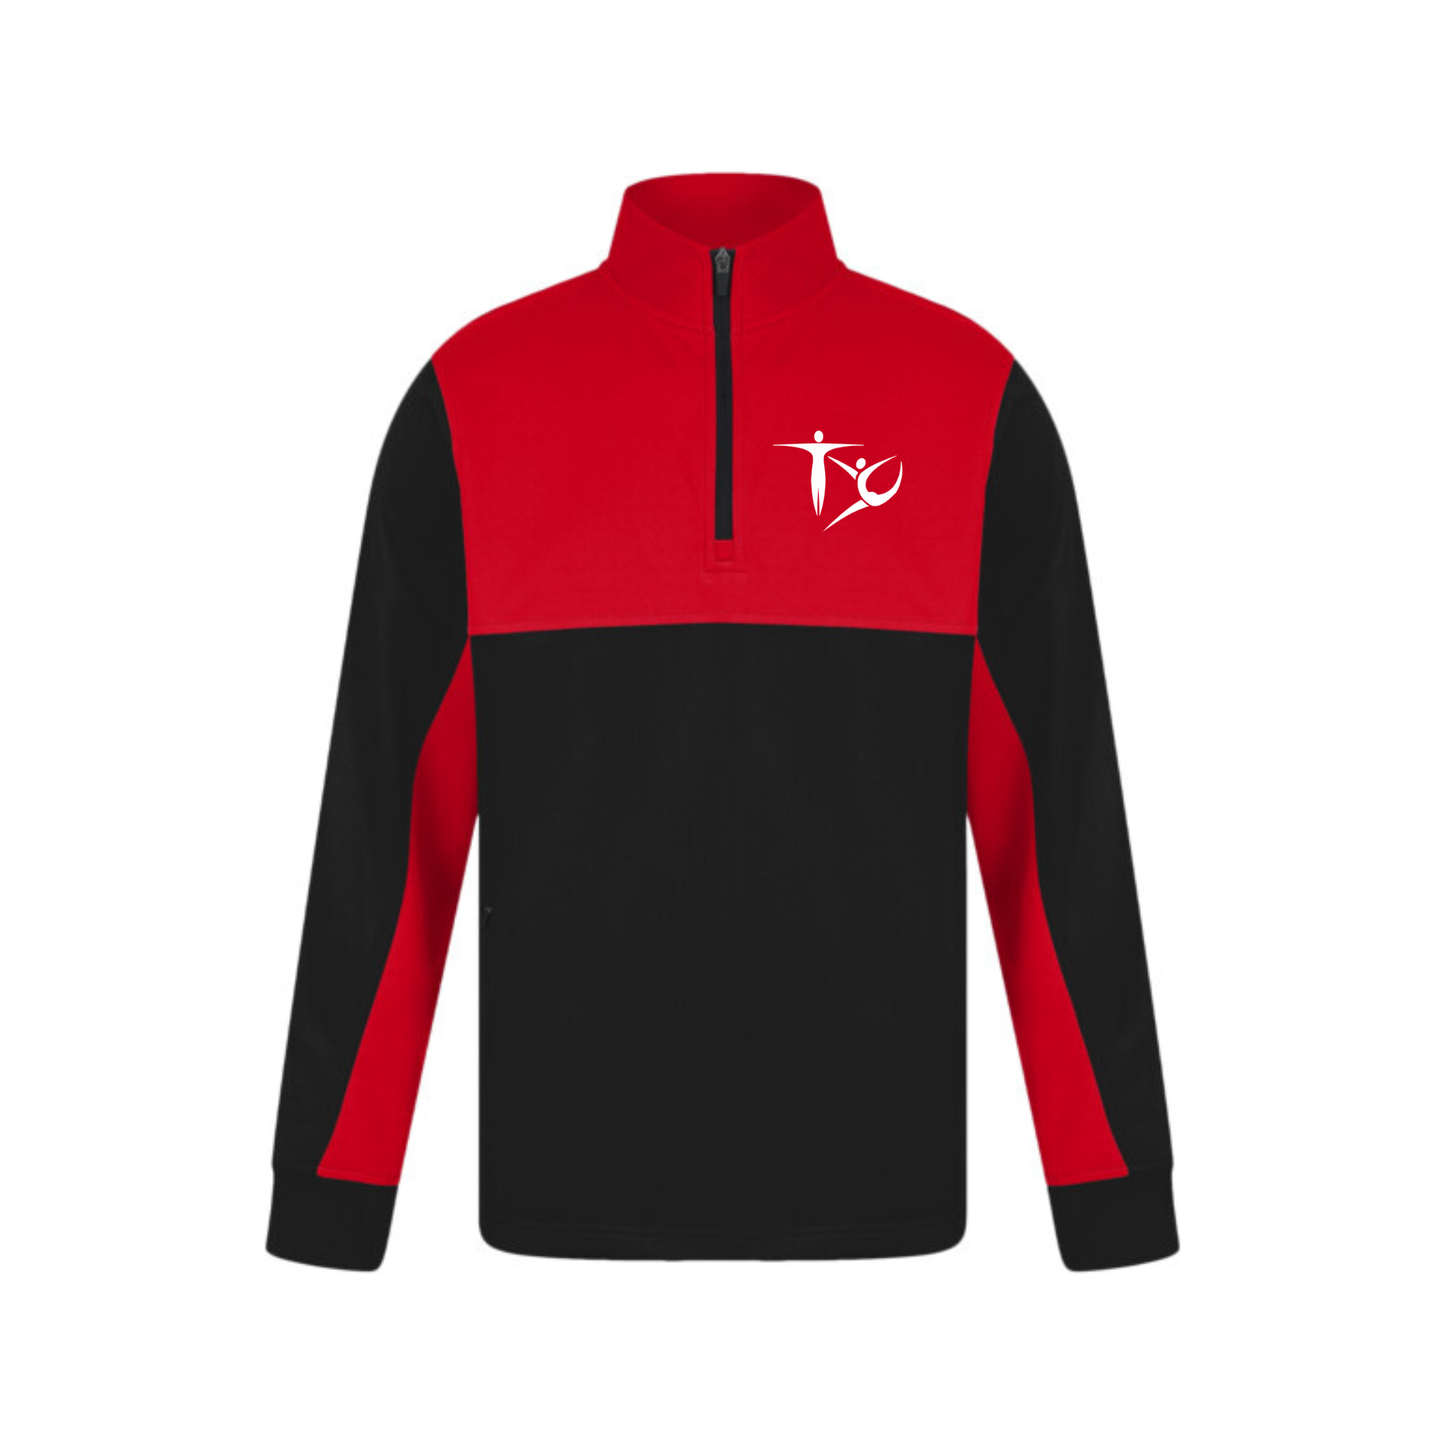 Basingstoke Coach Team Wear Tracksuit and Bag Bundle Black/Red